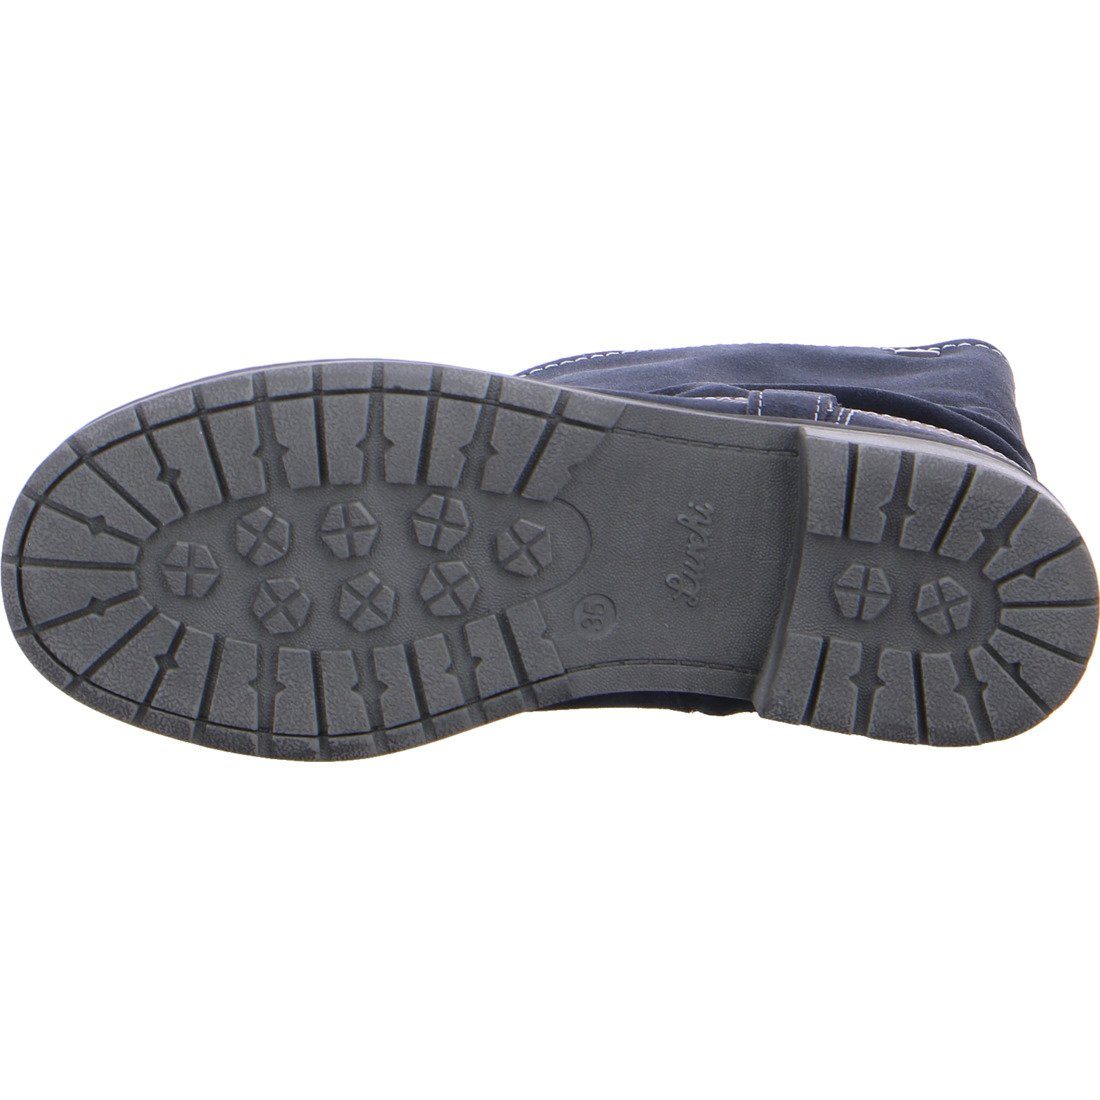 Lia-Tex 044032 Stiefel Schuhe, - Lurchi blau Lurchi Rauleder Stiefel